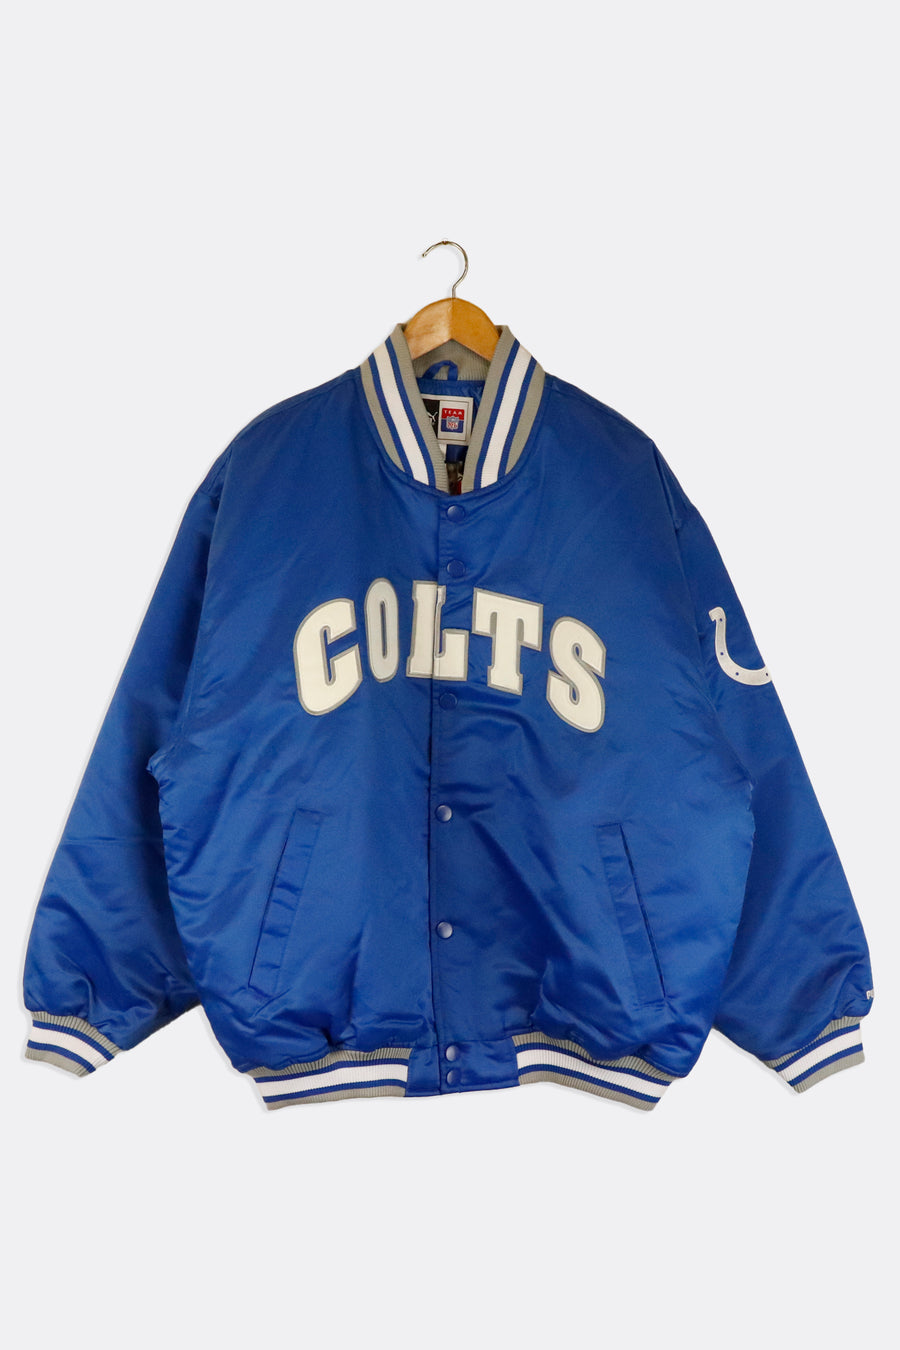 Vintage NFL Indianapolis Colts Full Button Up Bomber Jacket Sz L